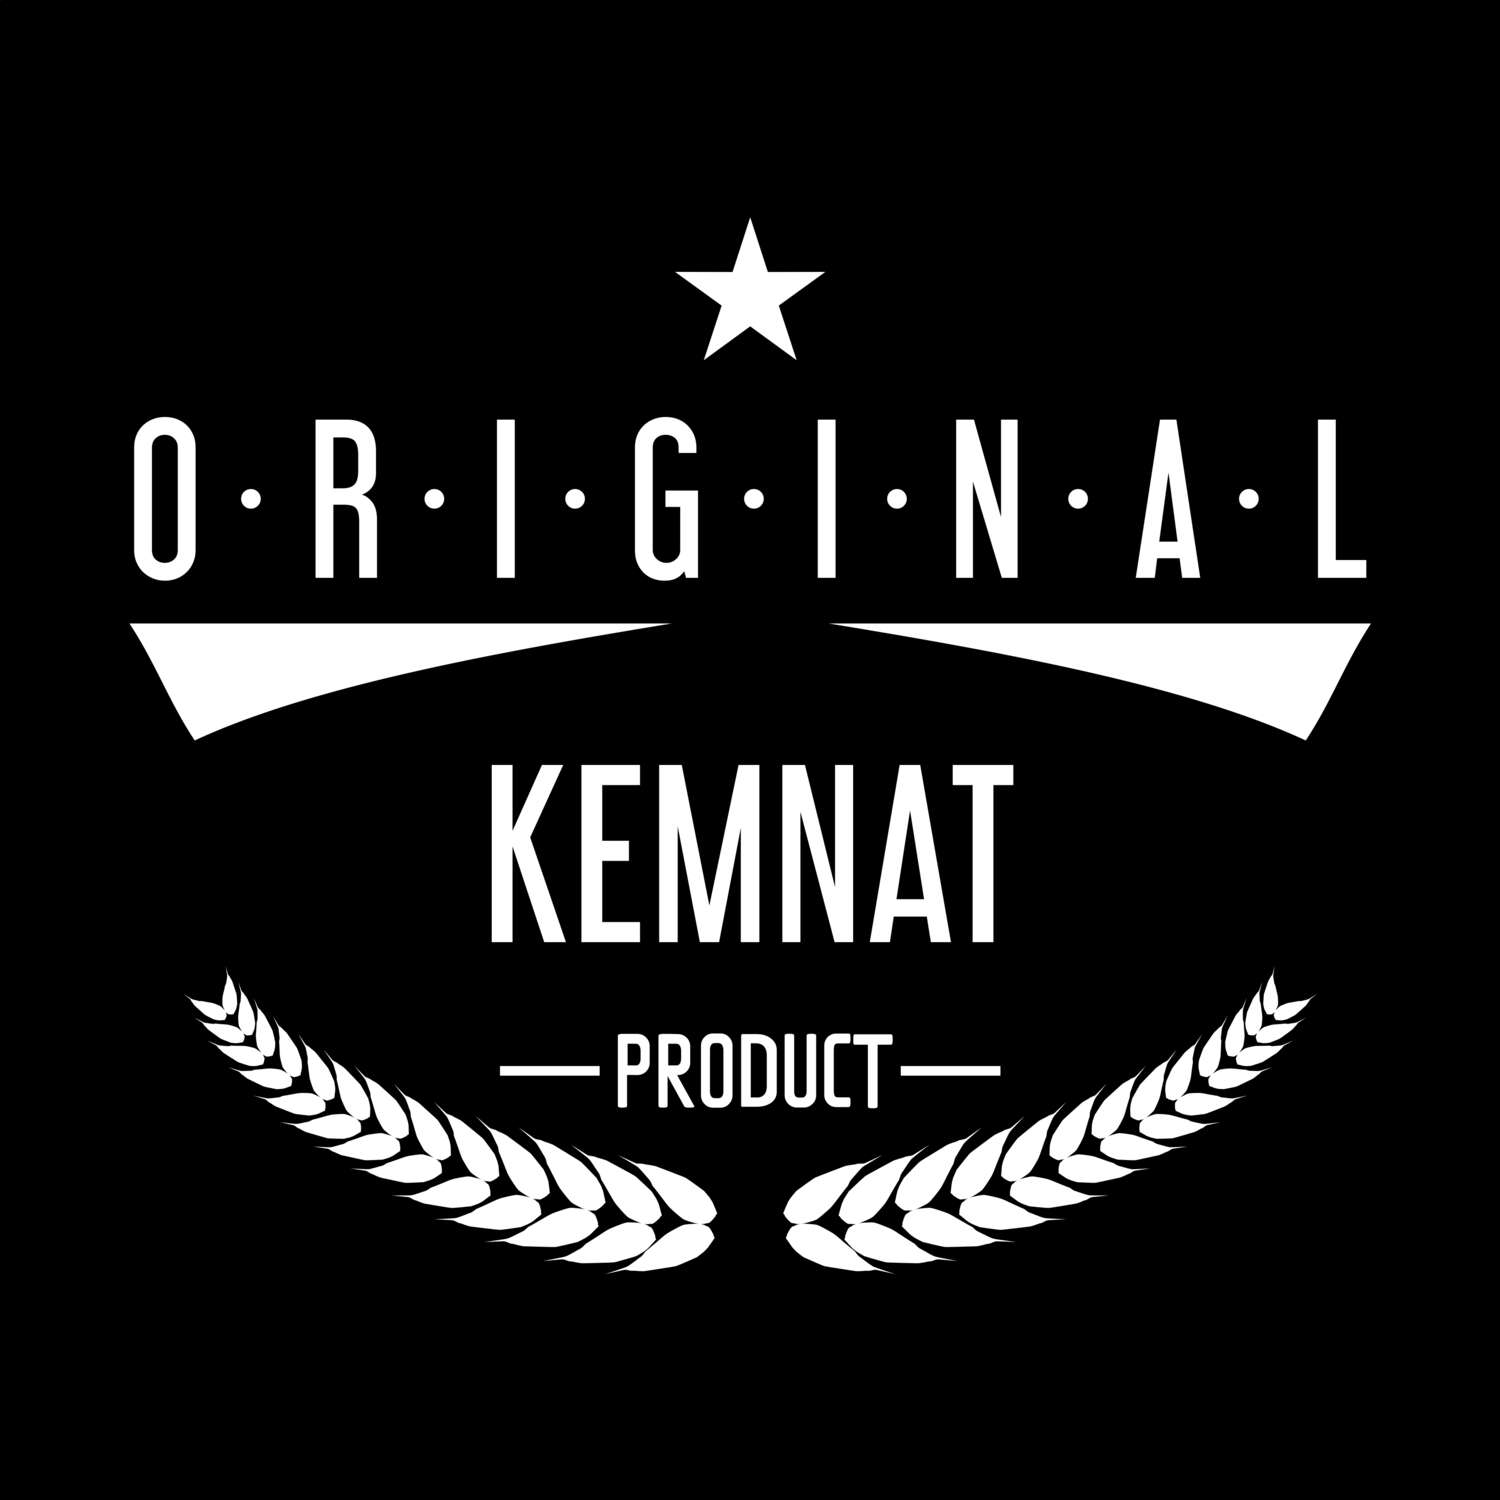 Kemnat T-Shirt »Original Product«